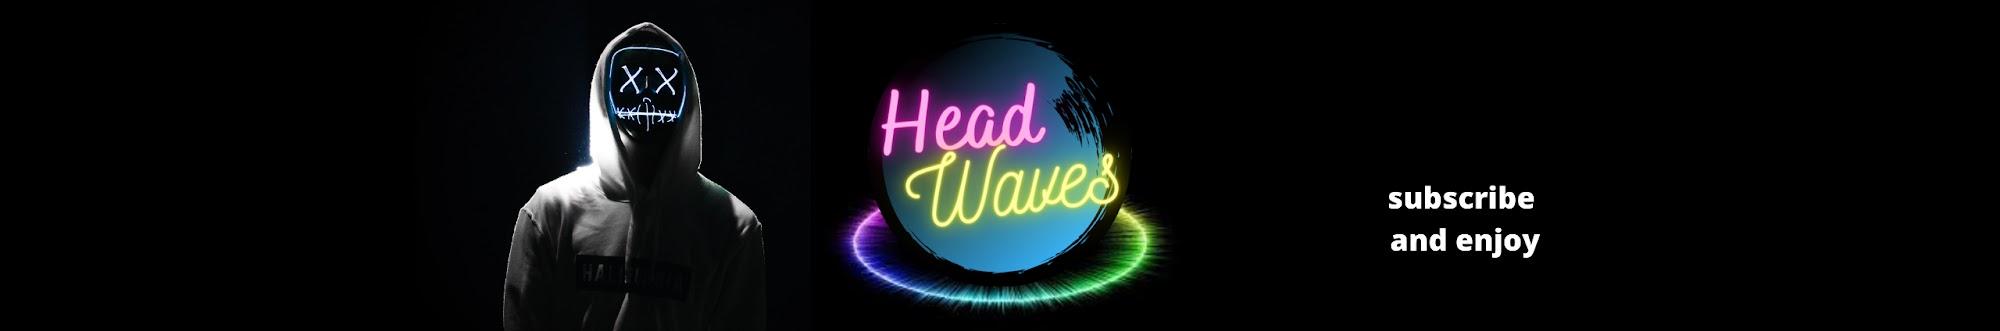 Head Waves